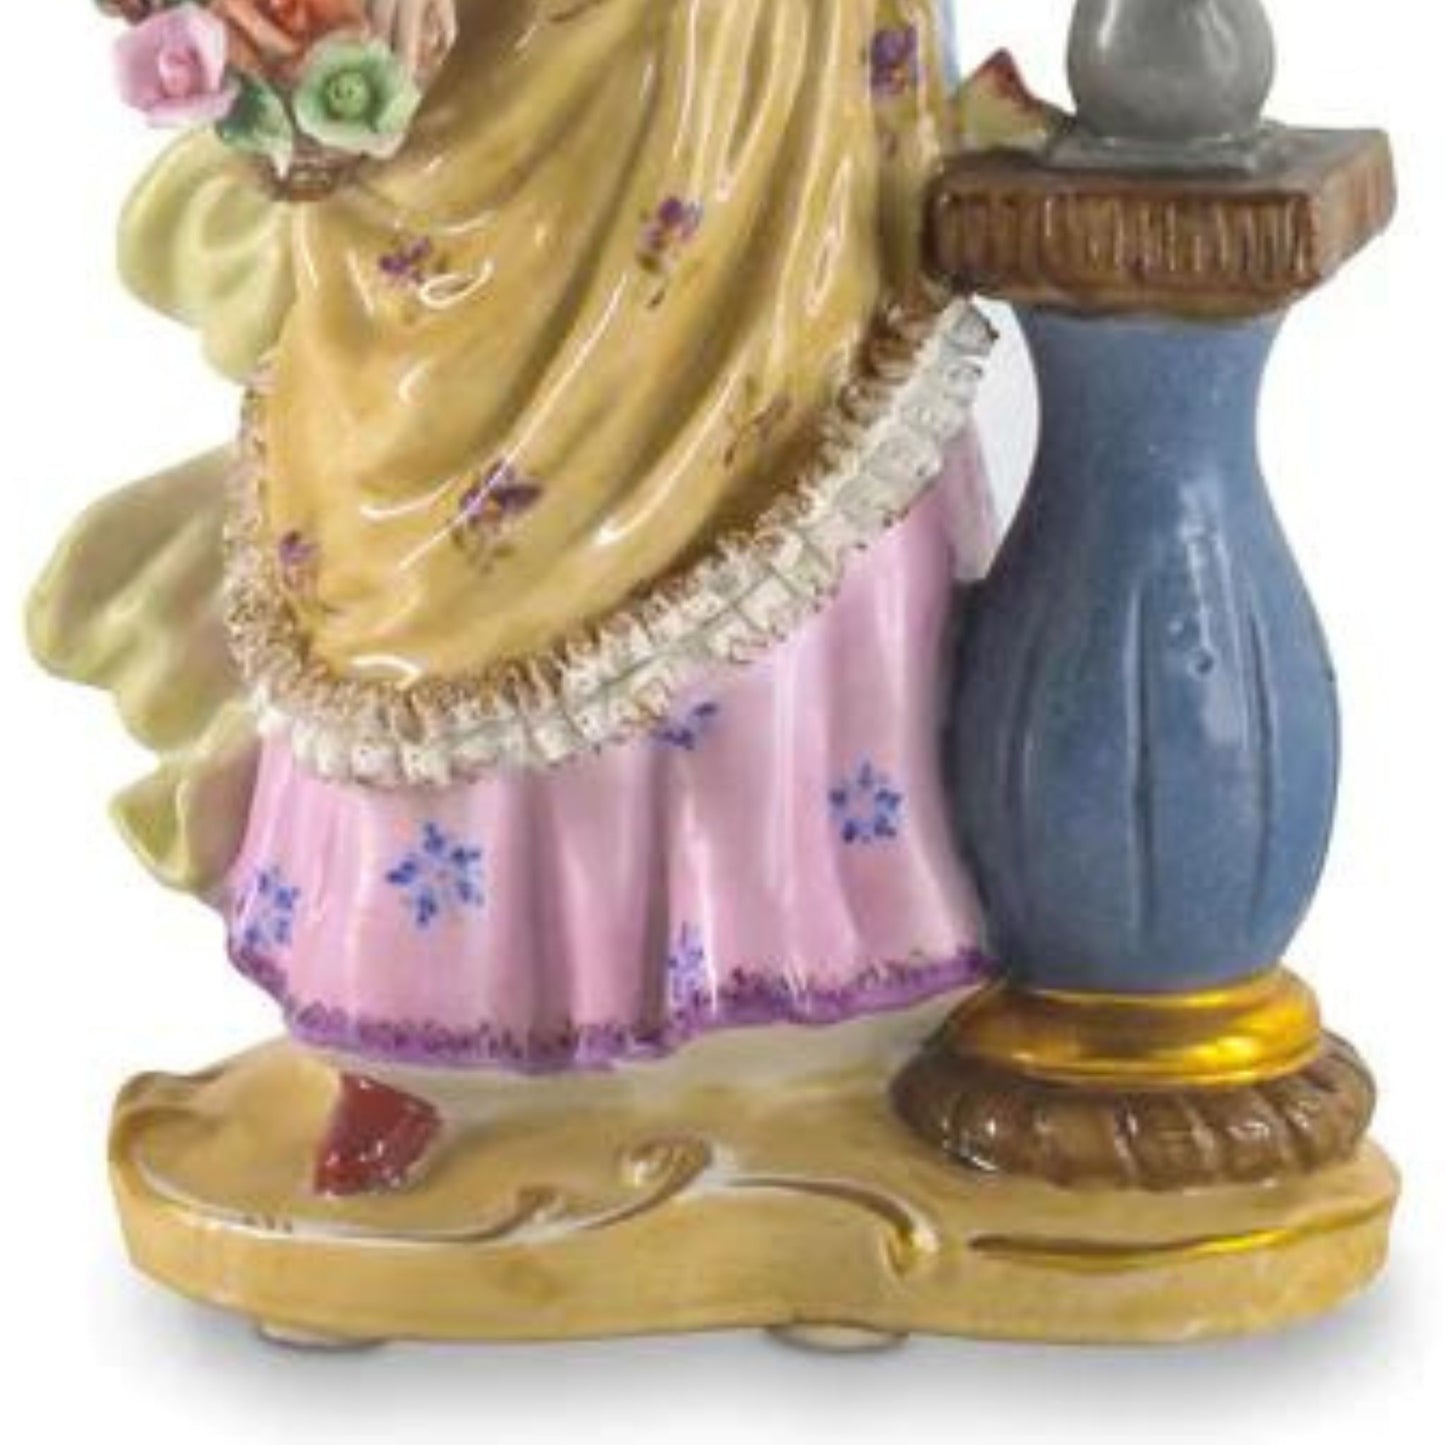 Victorian Lady Figurine